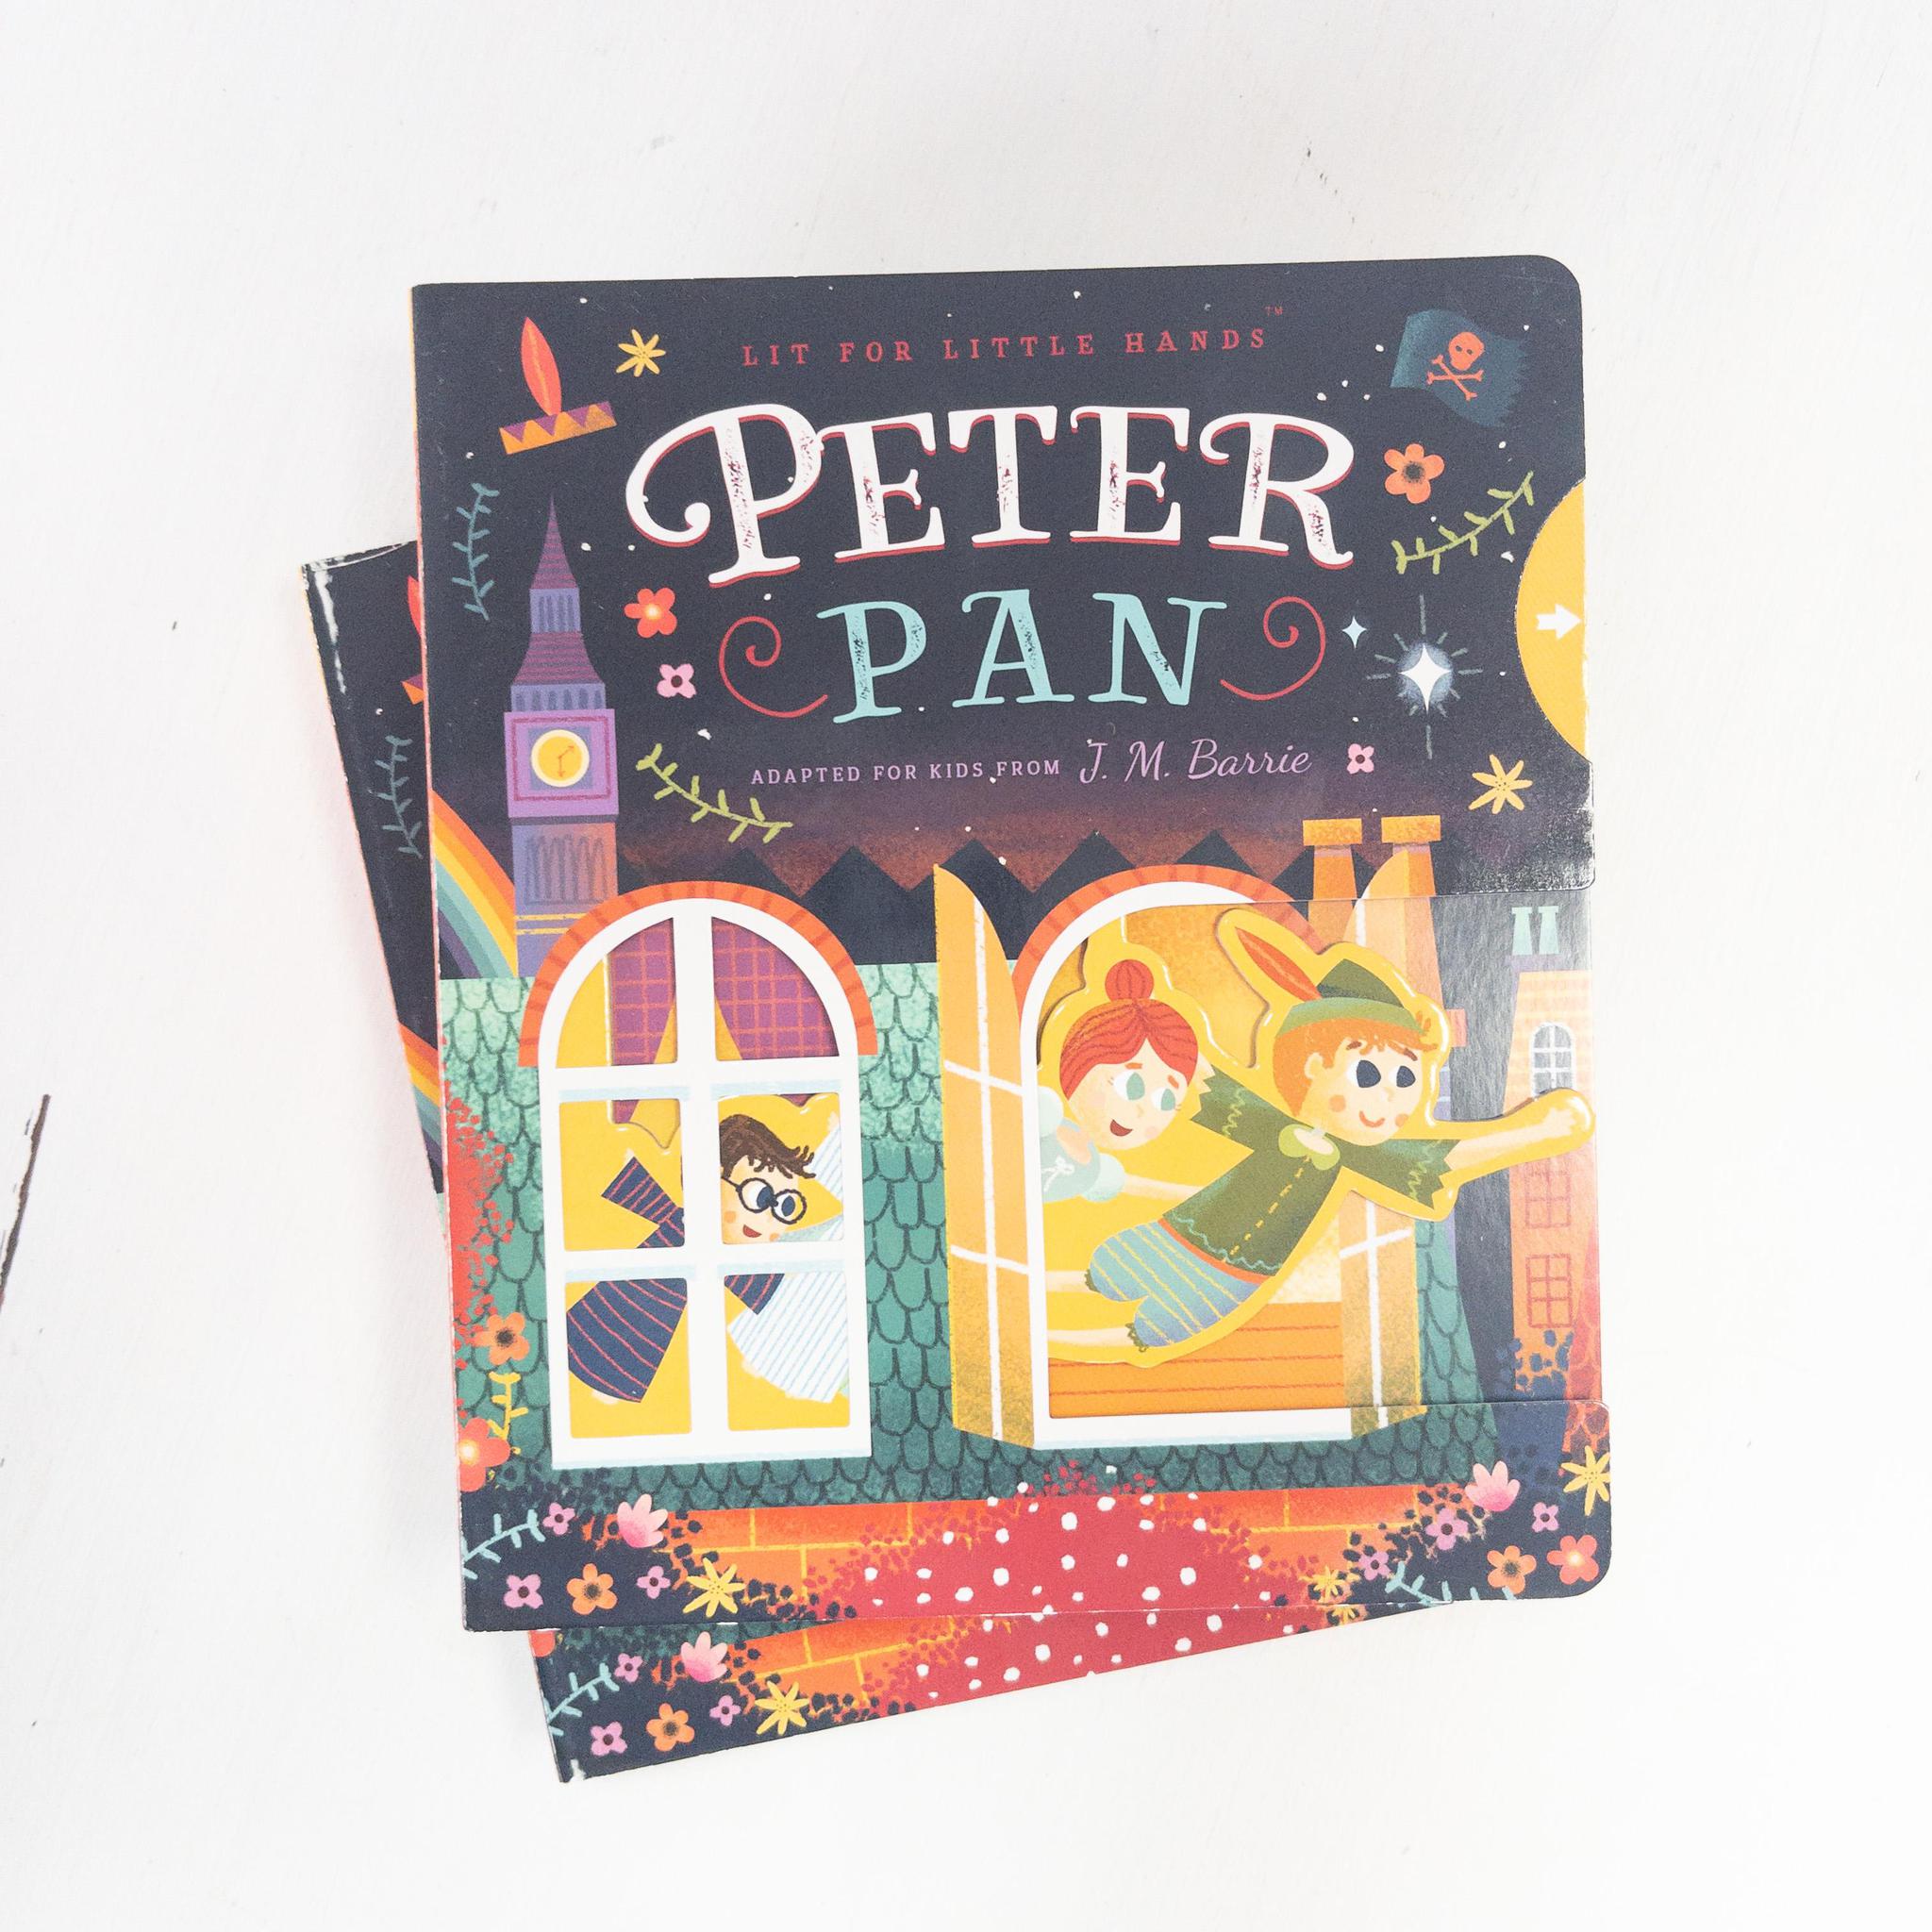 Peter Pan: Lit For Little Hands